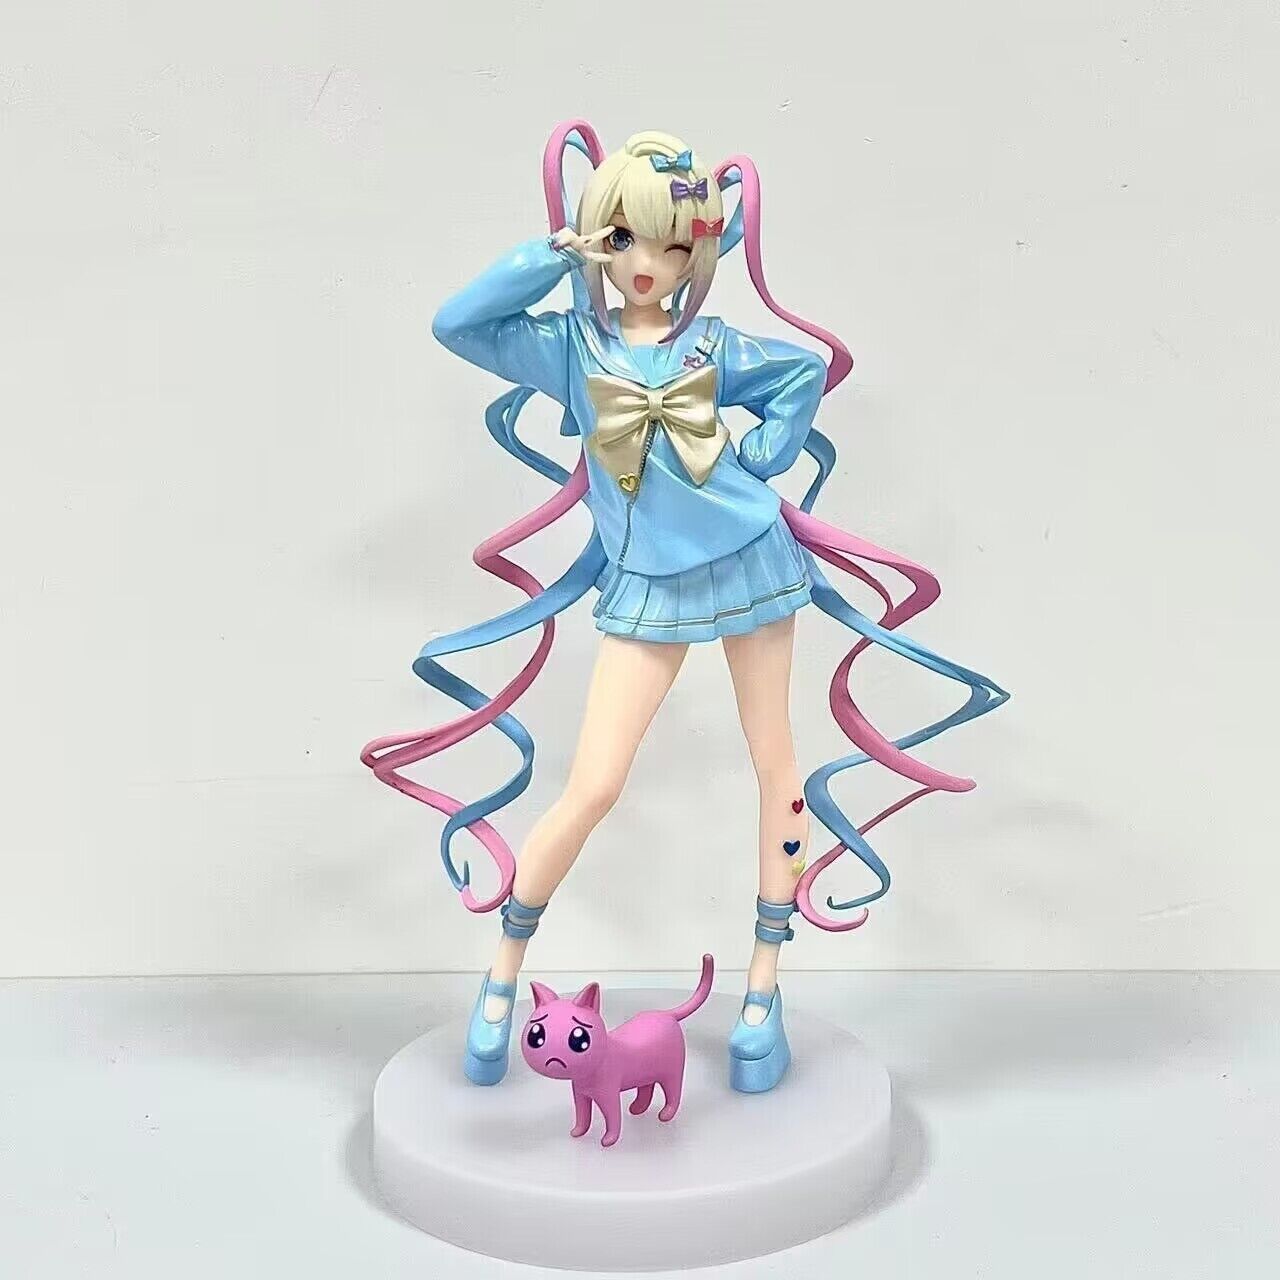 New 1/7 19CM Girl Anime statue PVC Characters FigureToy Gift No box